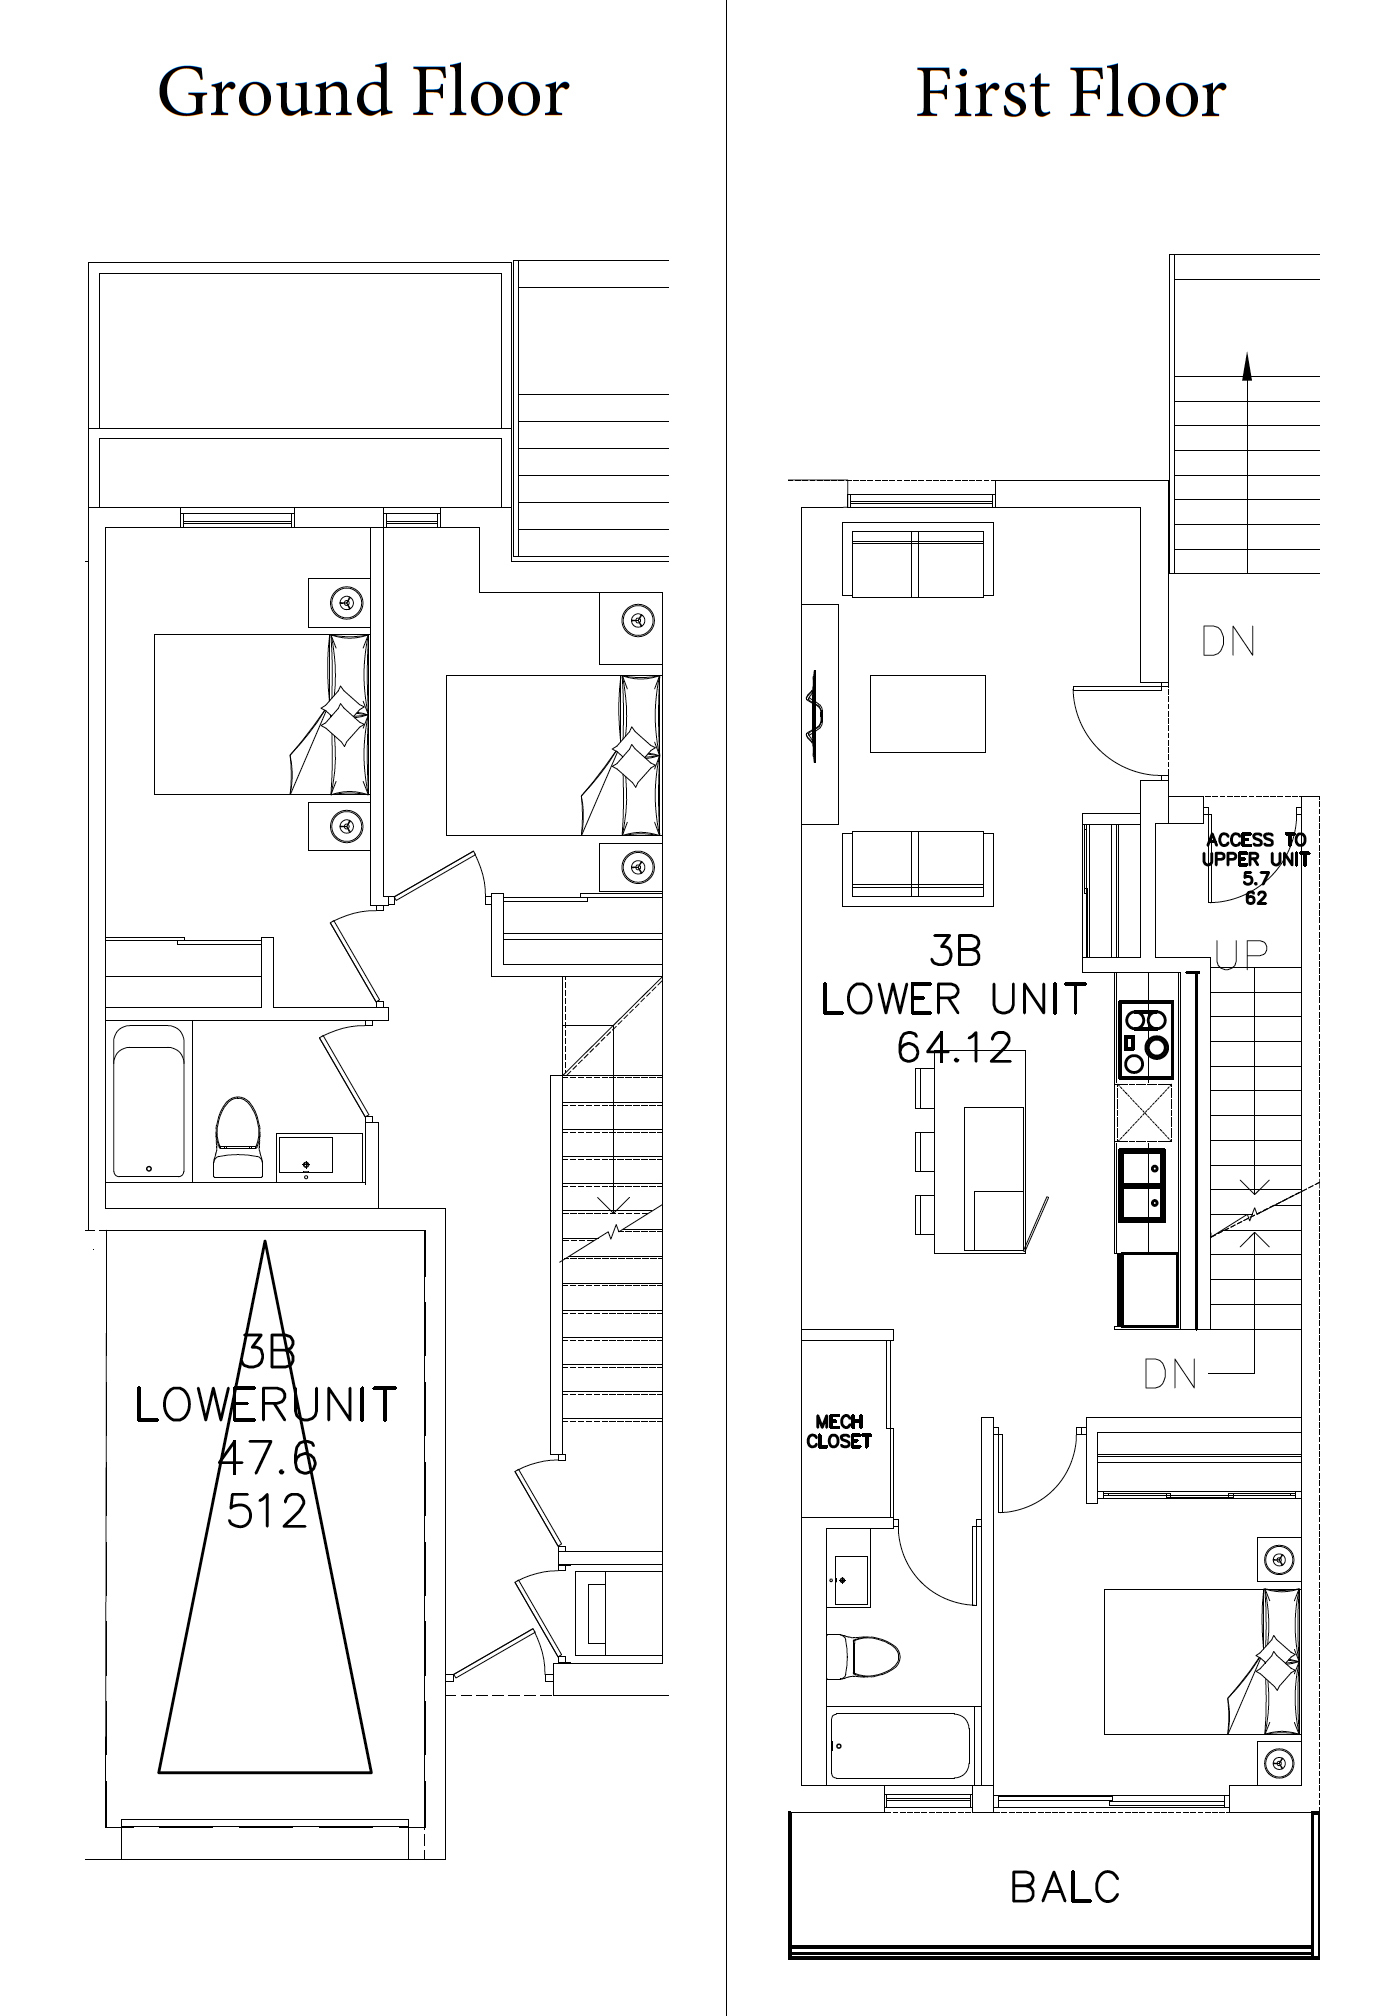 Lower unit. Townhouse Floorplan. План таунхауса в Дубае. Minimum Townhouse Floorplan. 27 Sqm Studio Floor Plan.